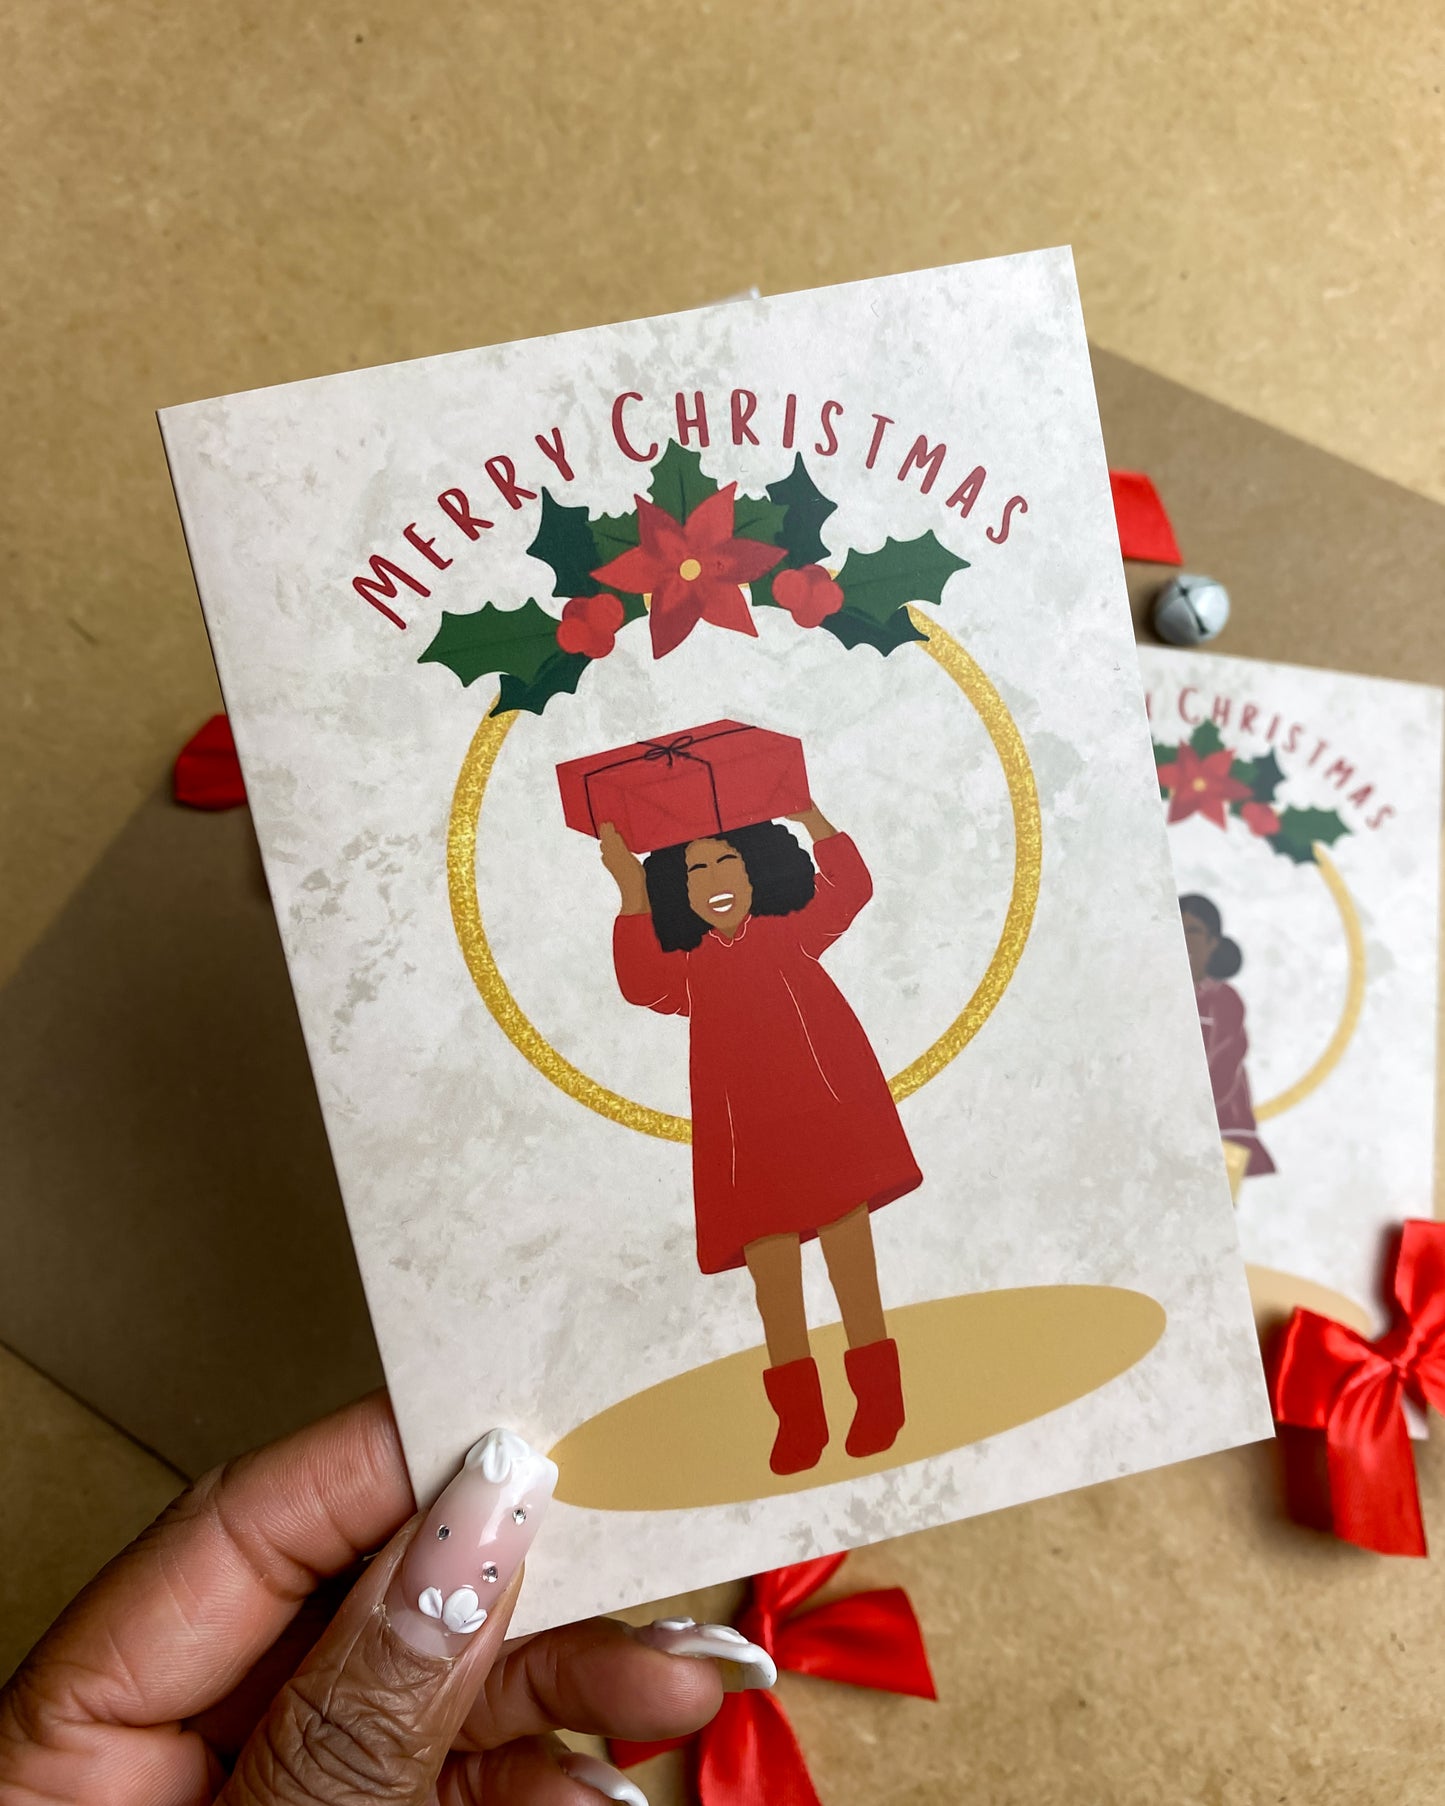 Assorted Multipack Black Chriatmas Gifts 6 Pack Christmas Cards - Children's Seasons Greetings